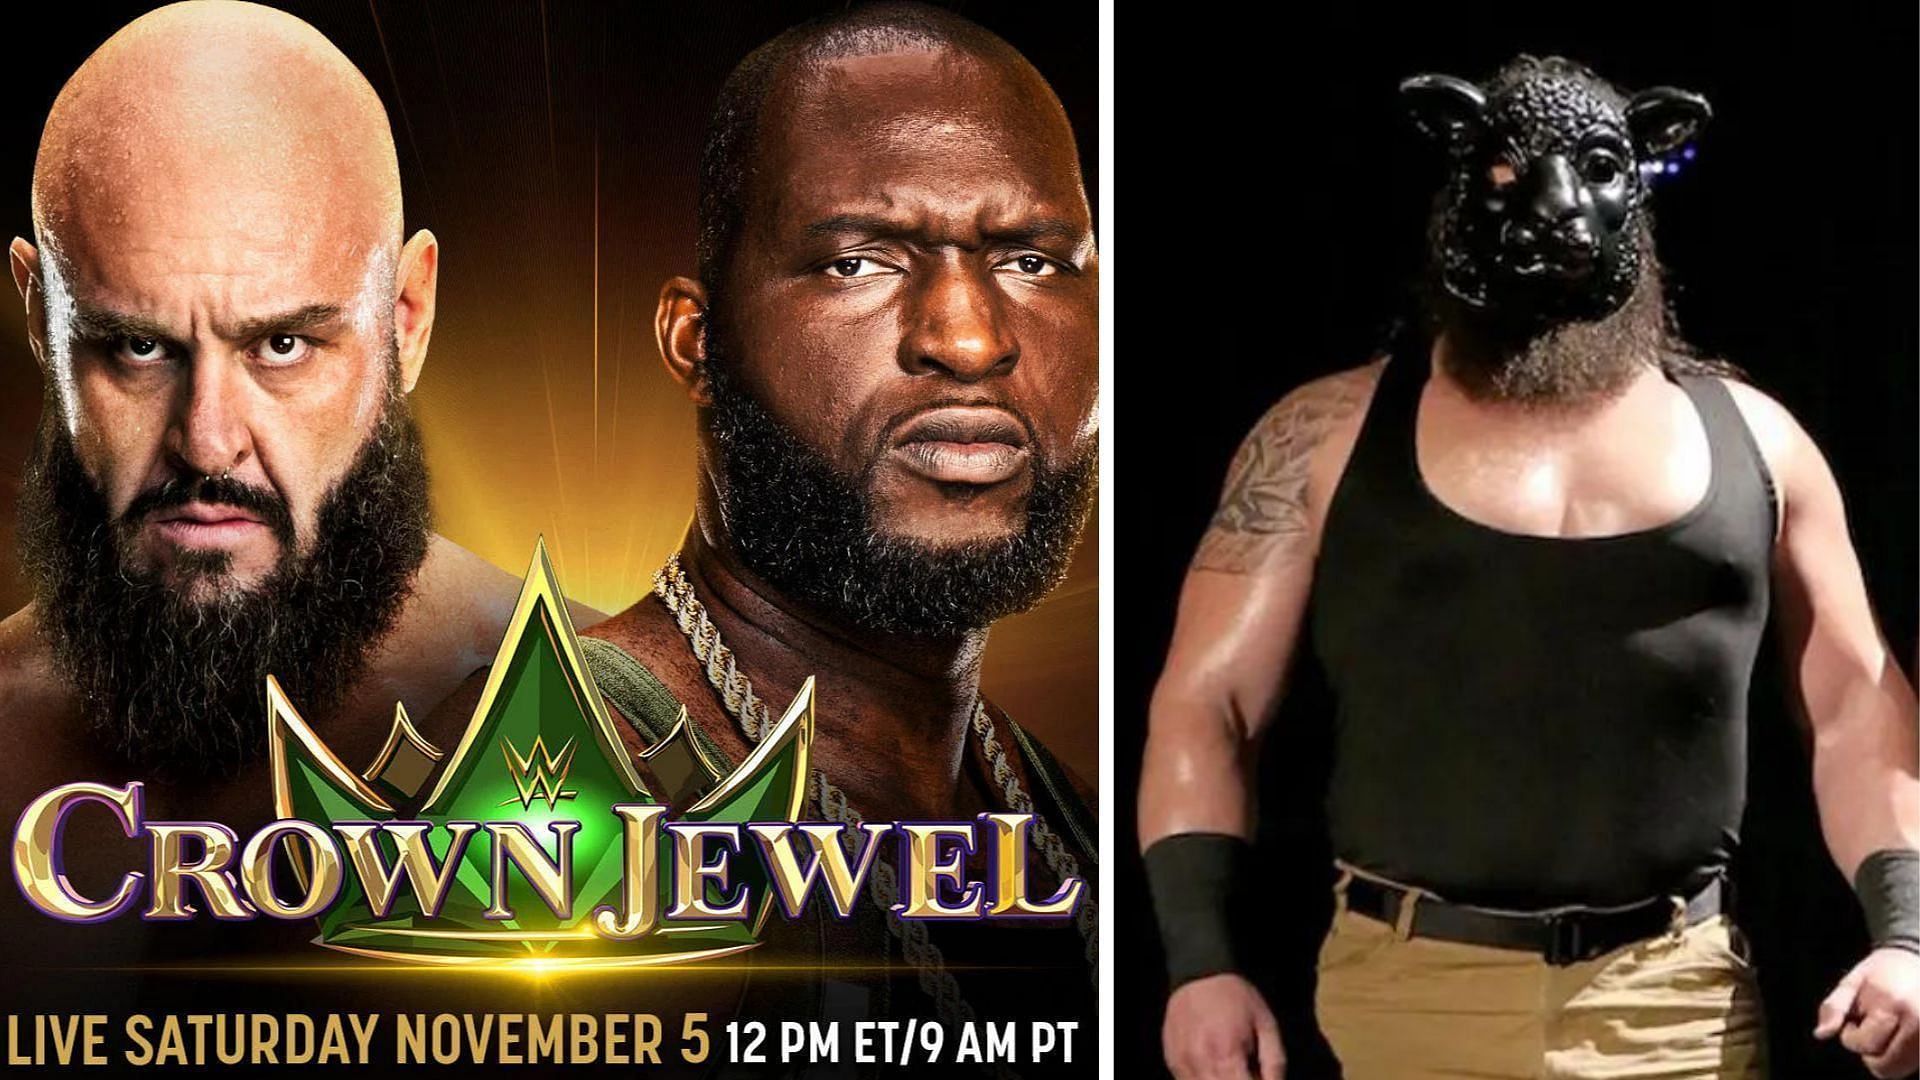 Braun Strowman will battle Omos this Saturday at WWE Crown Jewel